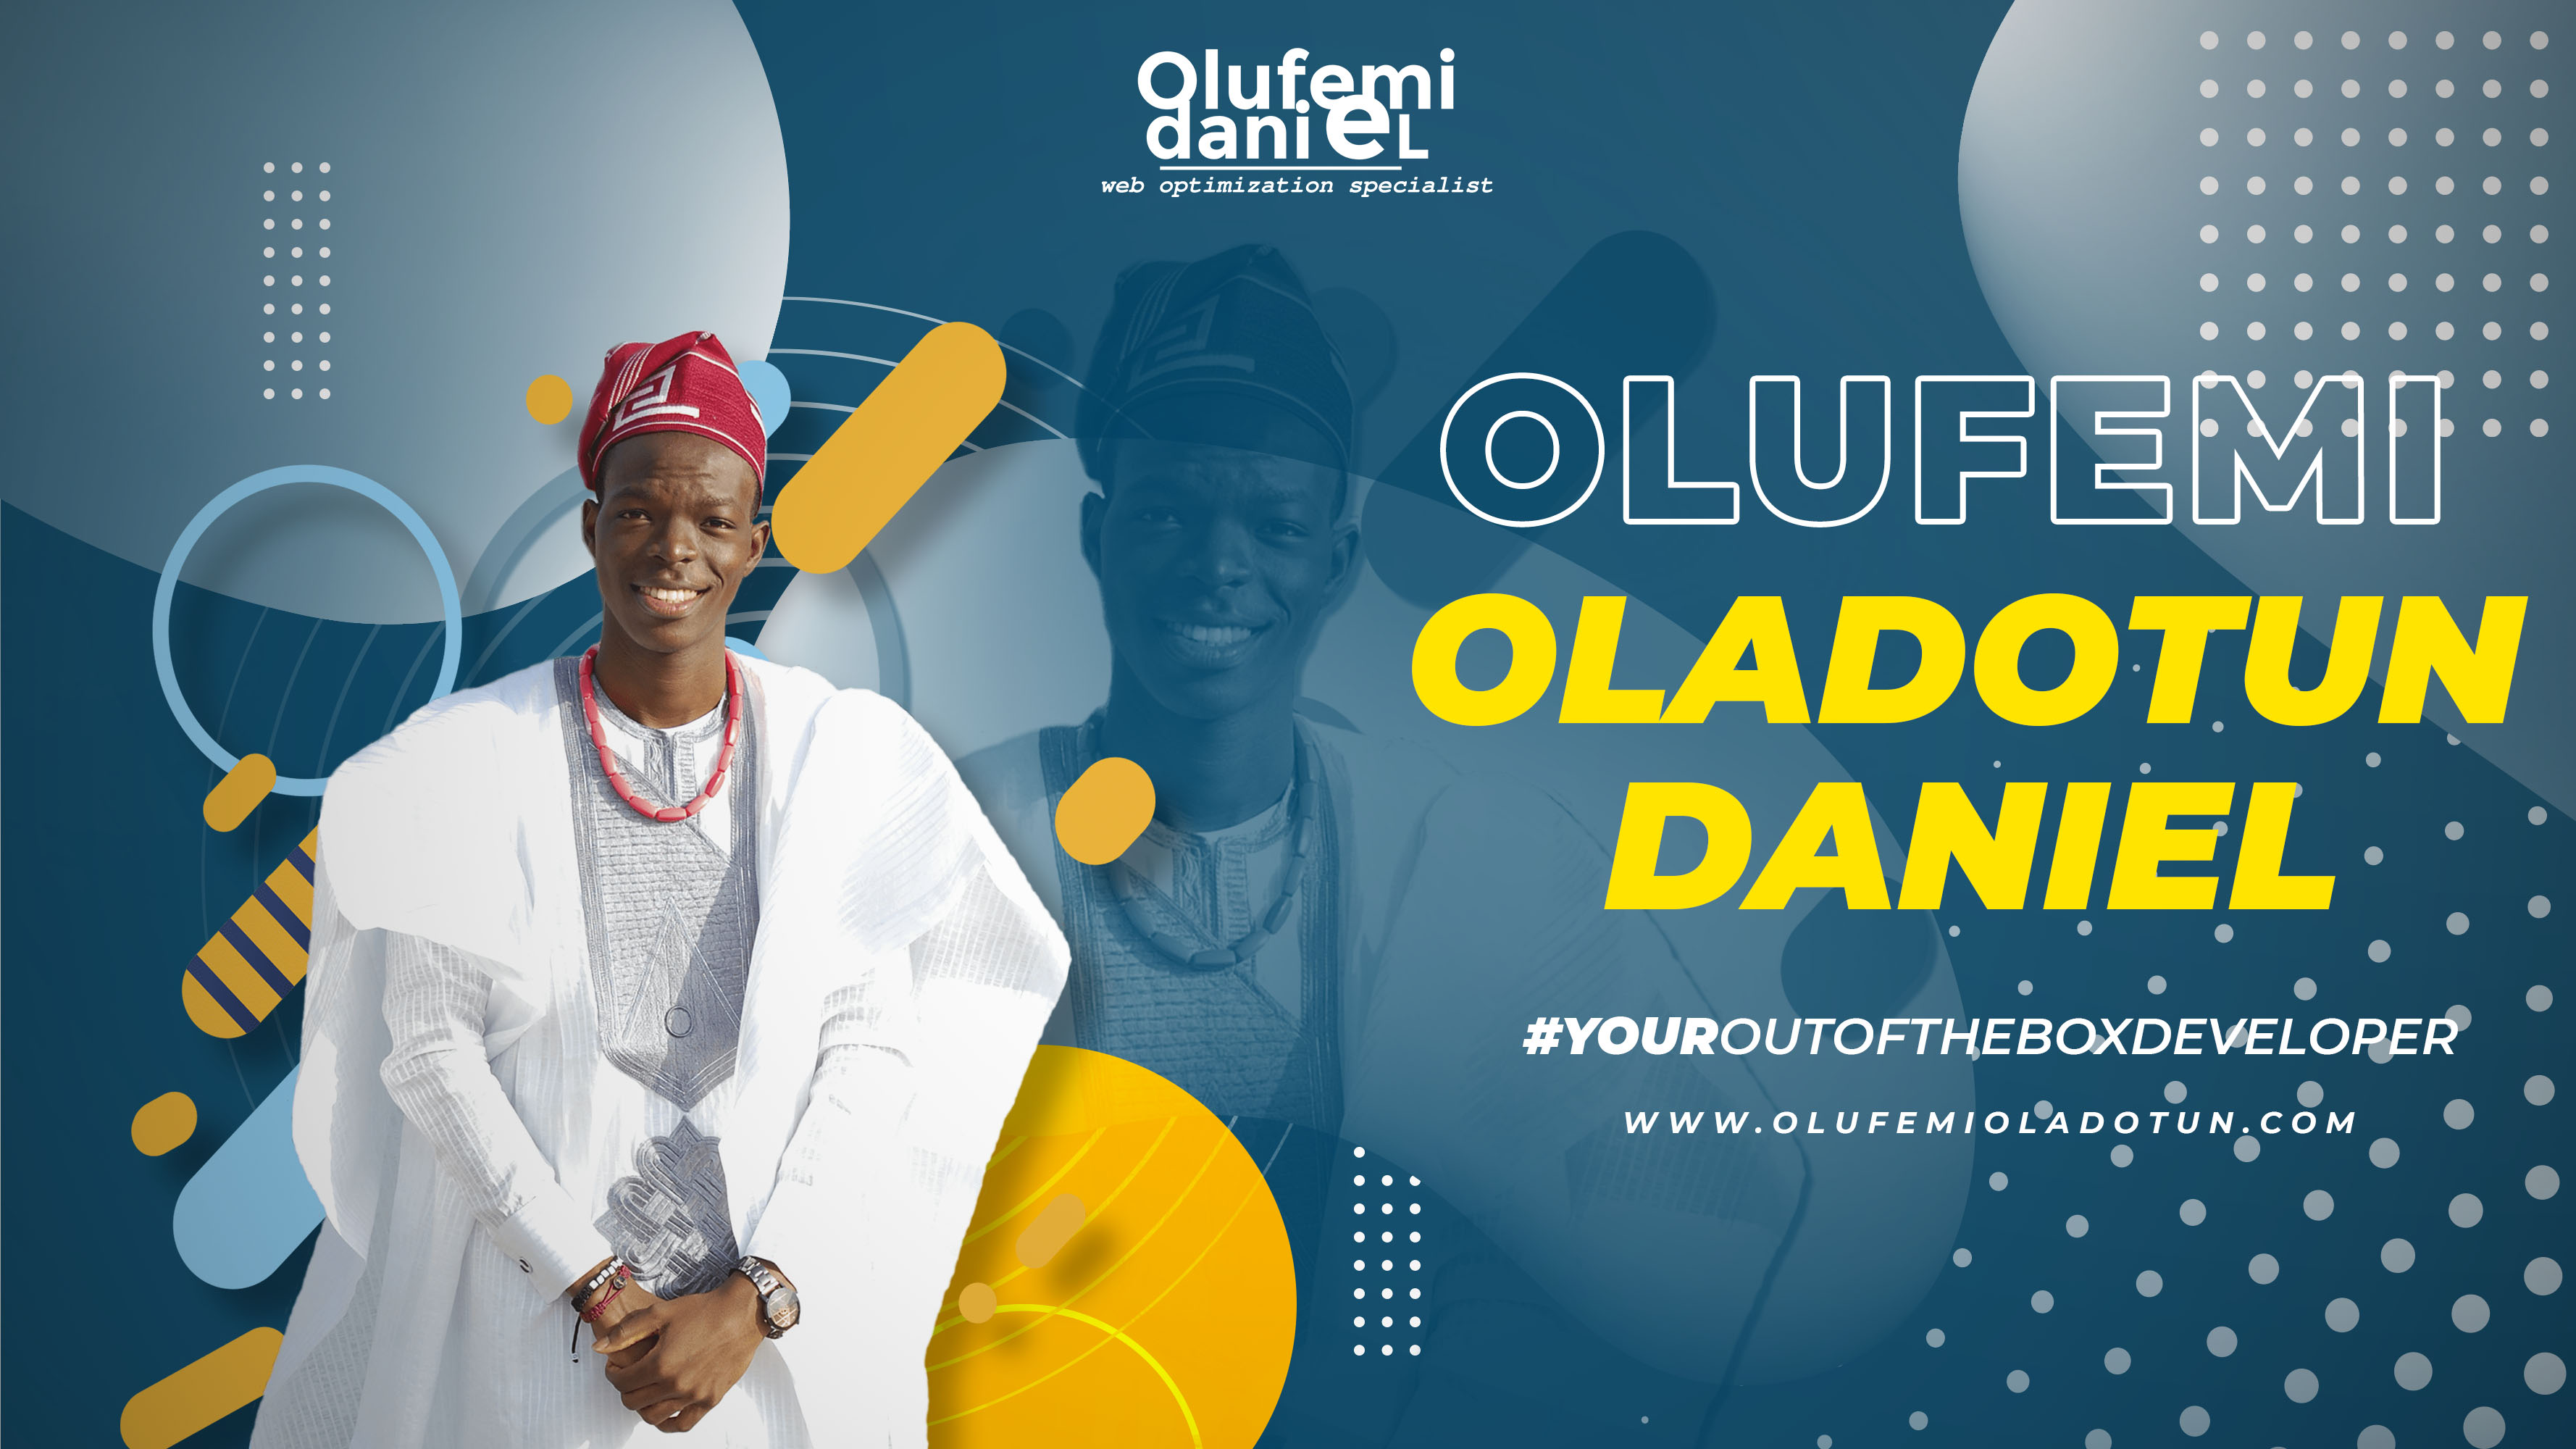 banner that says I'm Olufemi Oladotun Daniel. web optimization specialist